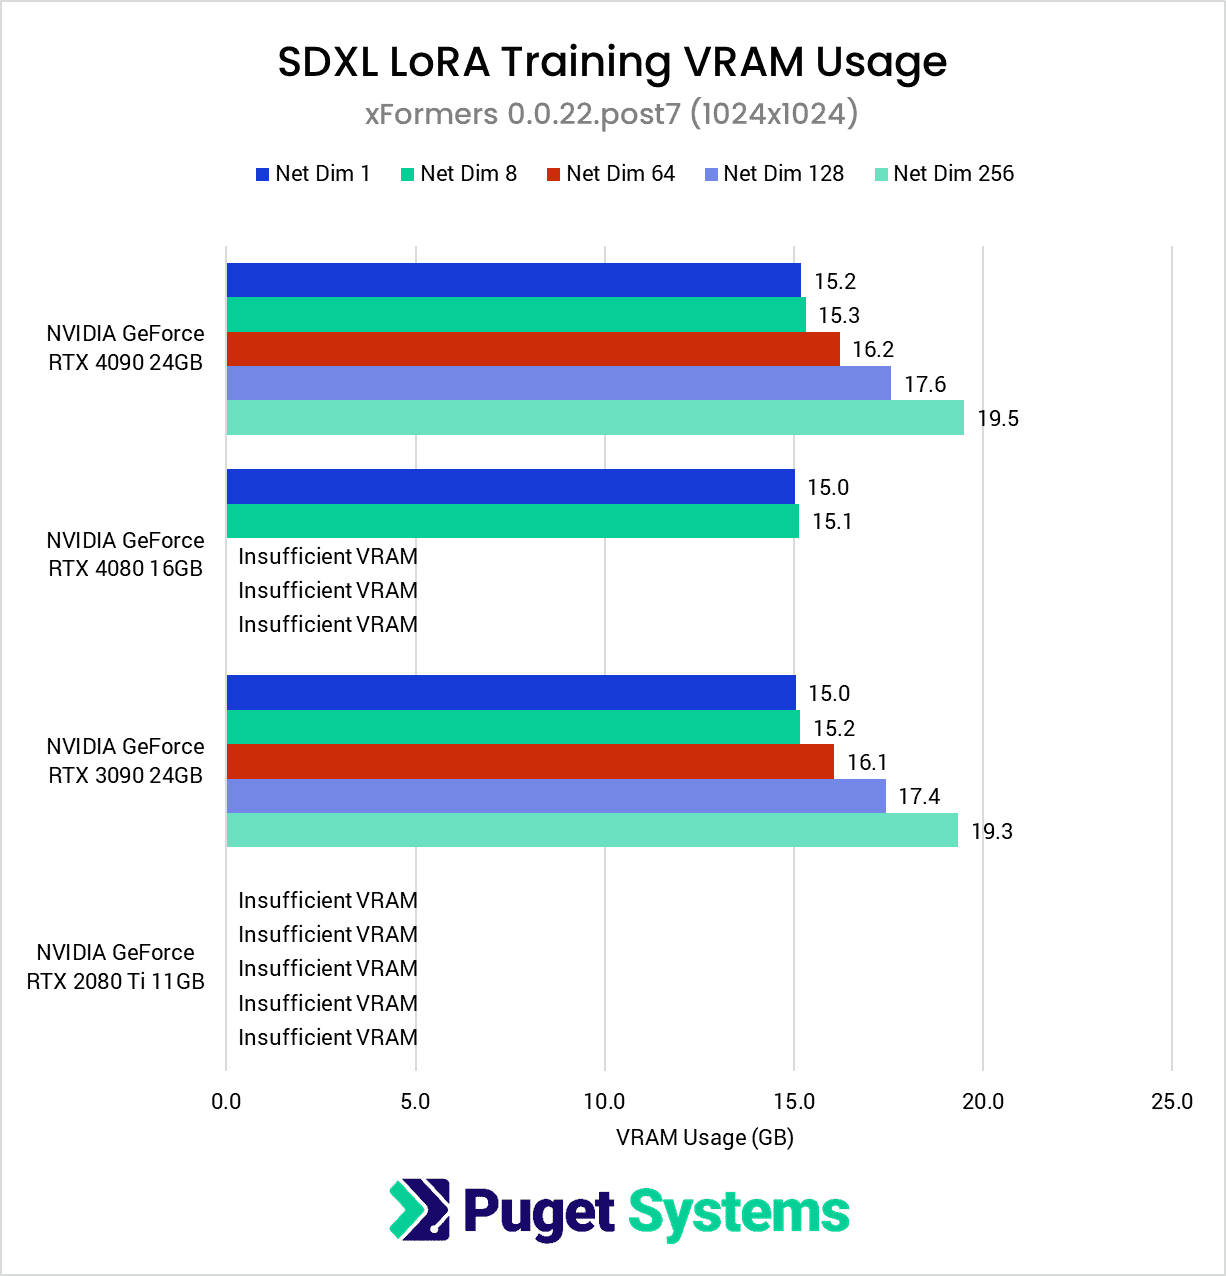 SDXL LoRA Training VRAM Usage - xFormers 1024